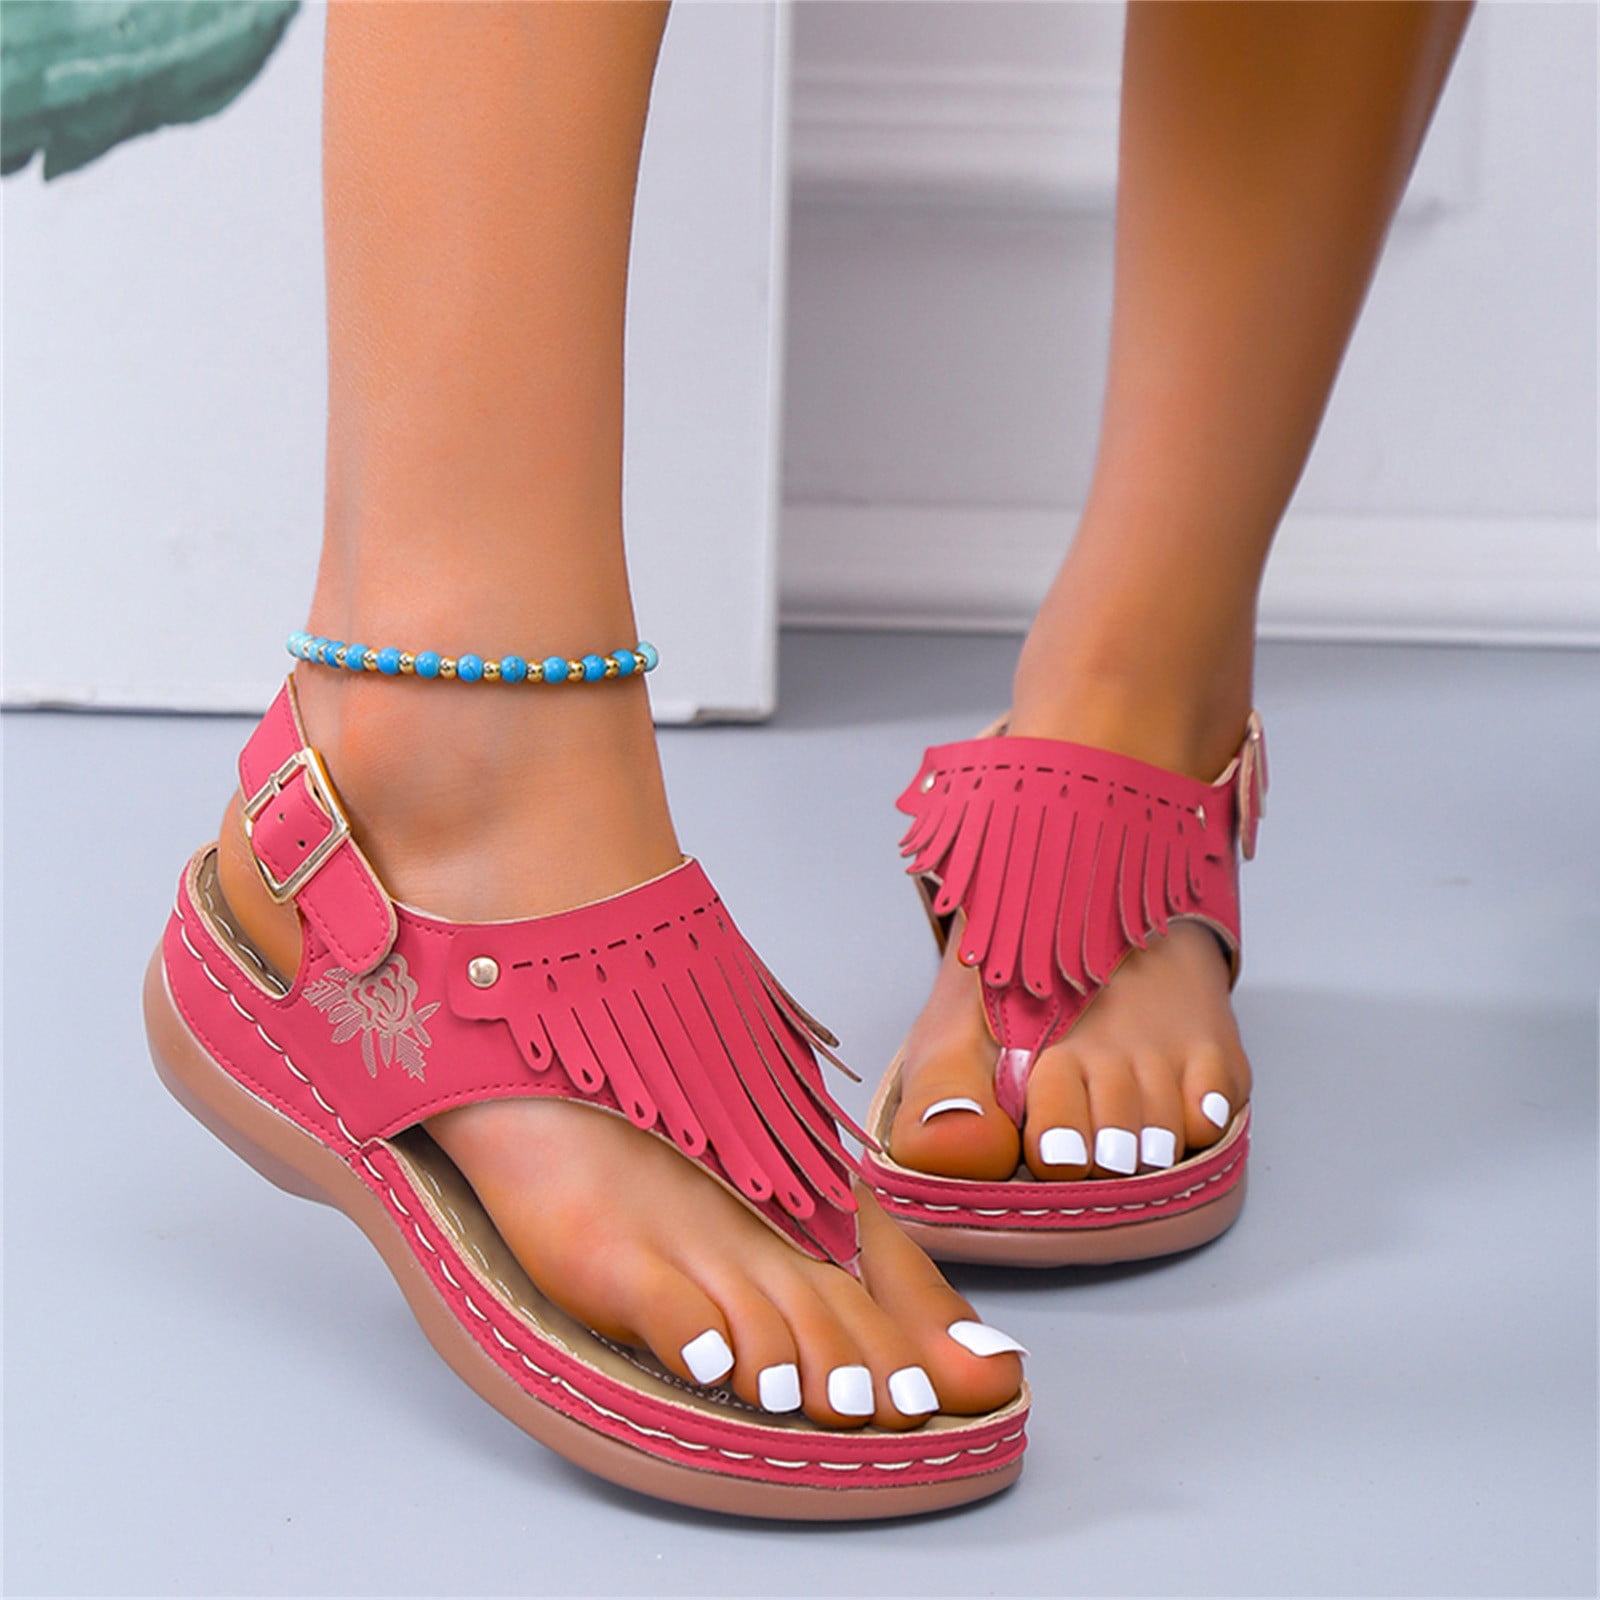 Hvyesh Orthopedic Sandals for Women Dressy Summer Clip Toe Sandals ...